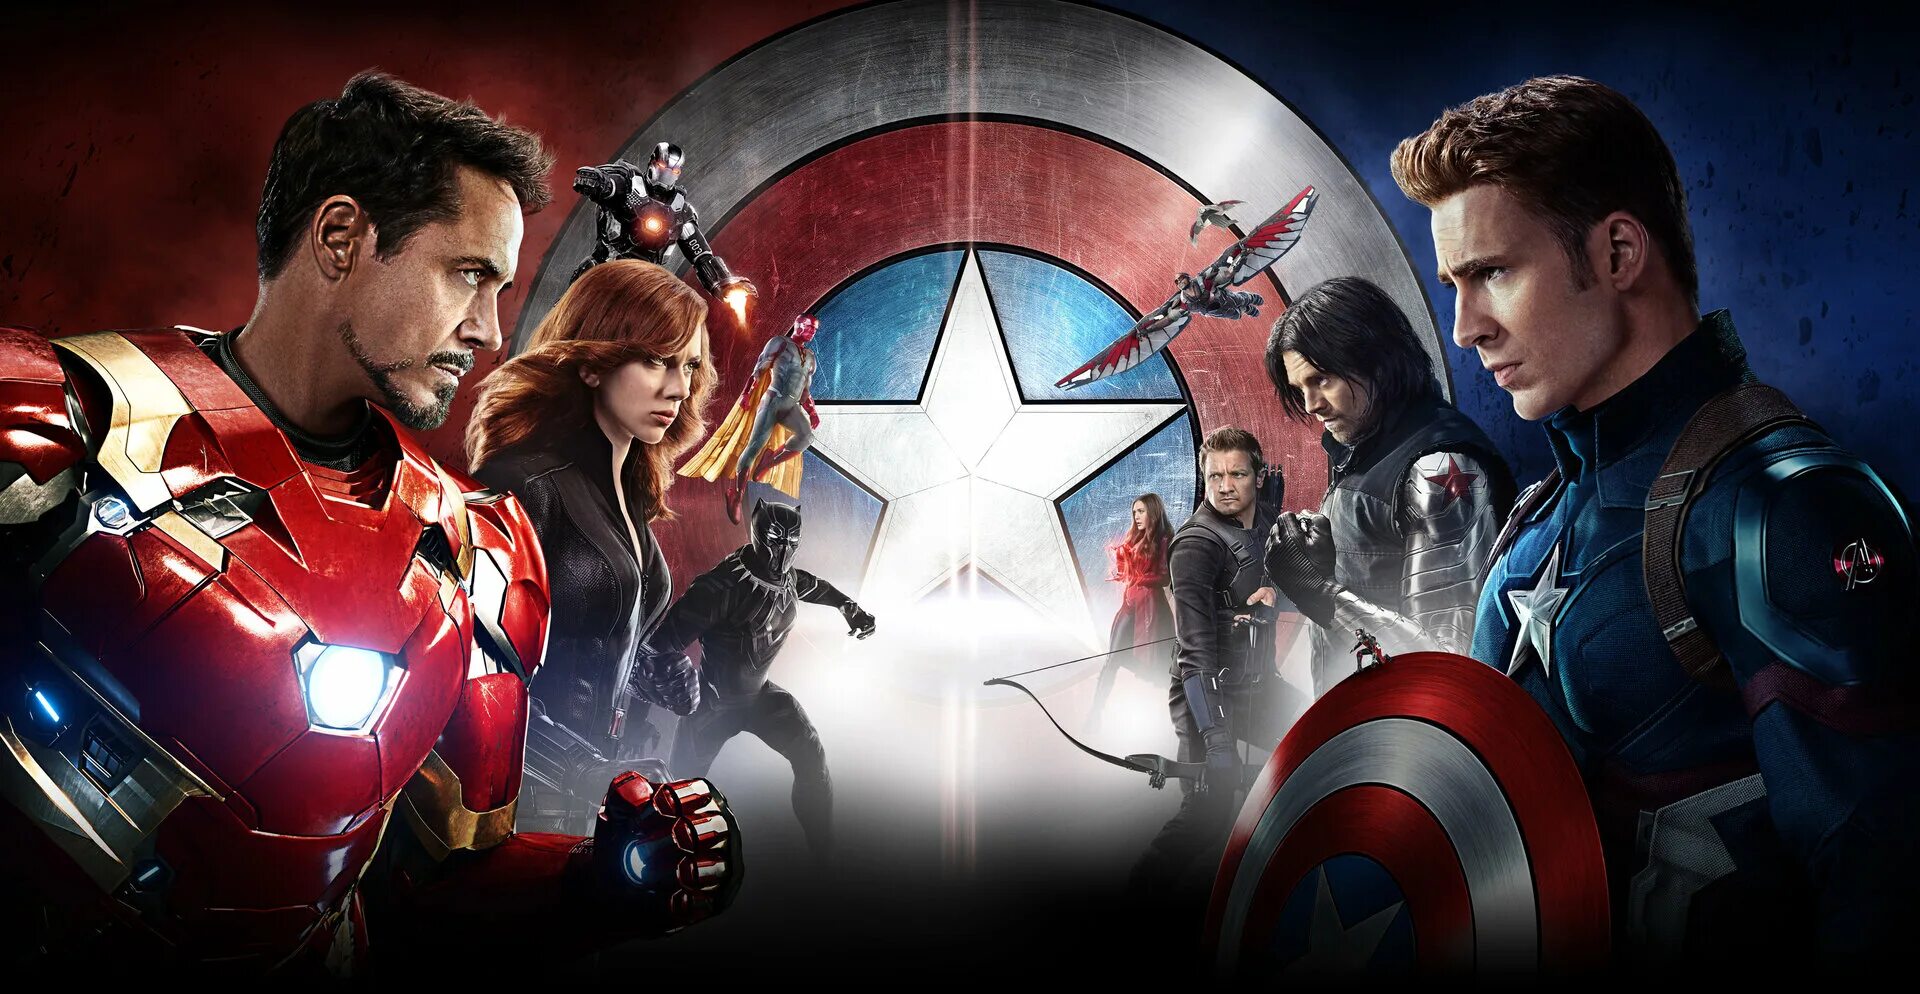 1 21 2016. Мстители Противостояние команда железного человека. Мстители Железный человек и Капитан Америка.